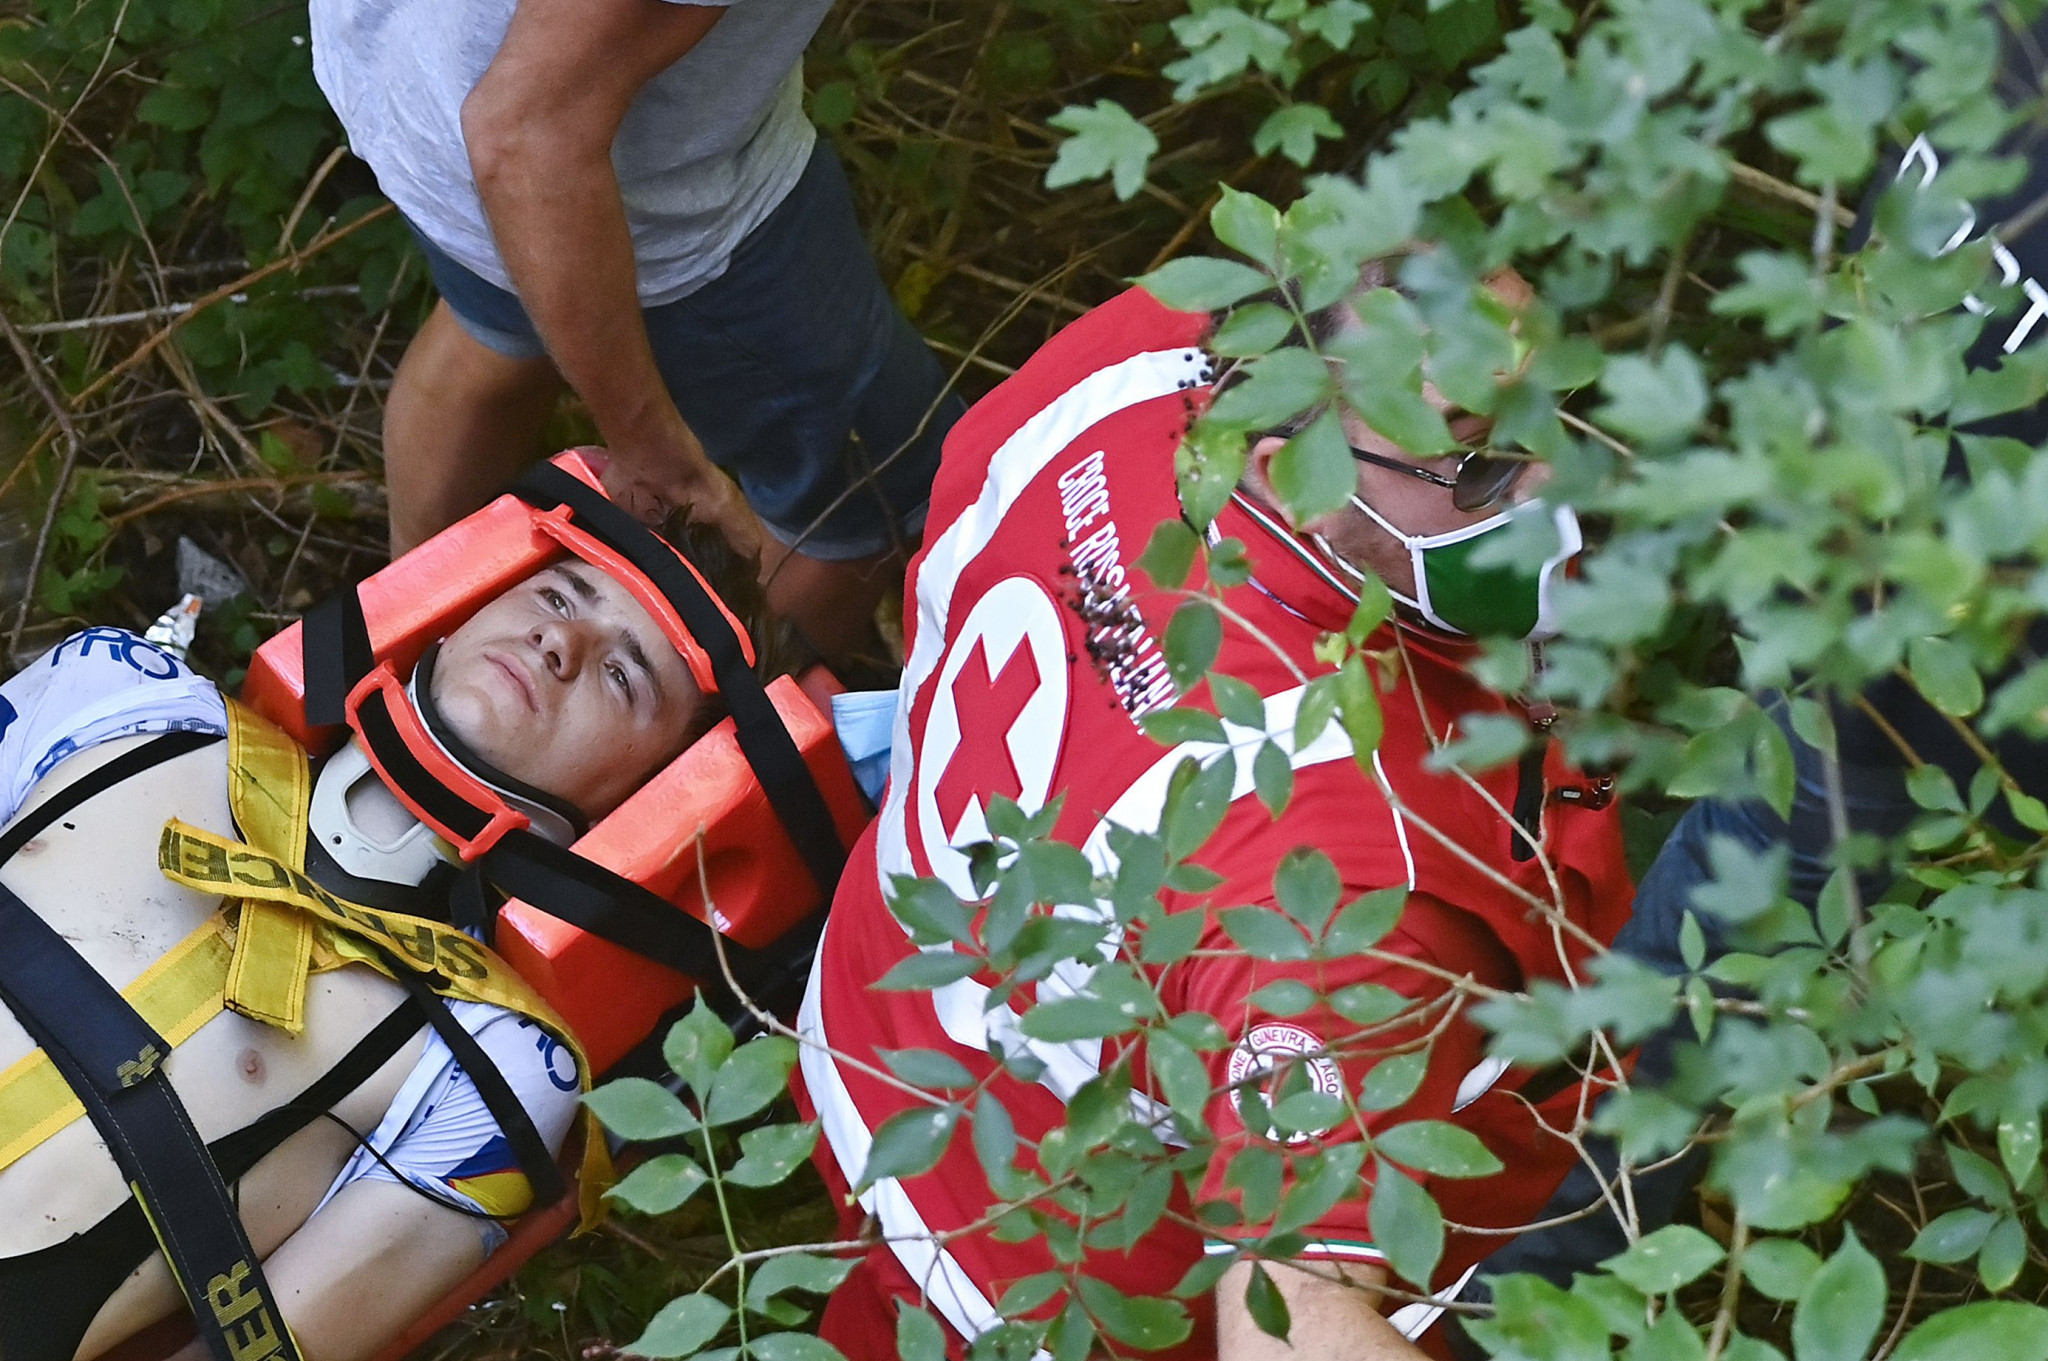 Remco Evenepoel fractured his pelvis in the crash ©Getty Images